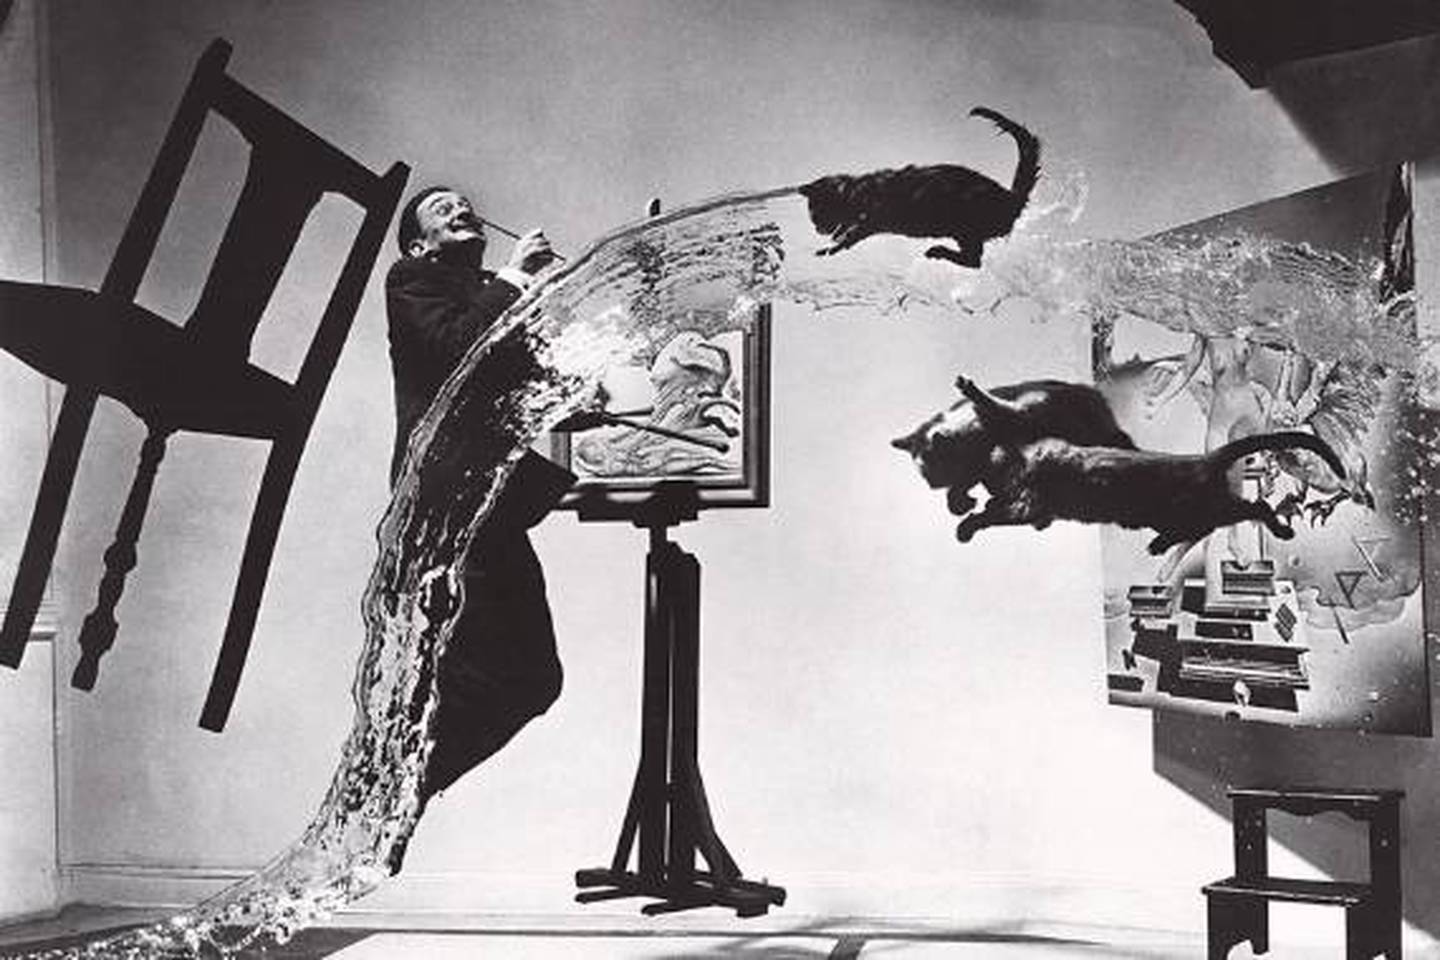 Dalí Atómico, Philippe Halsman, 1948